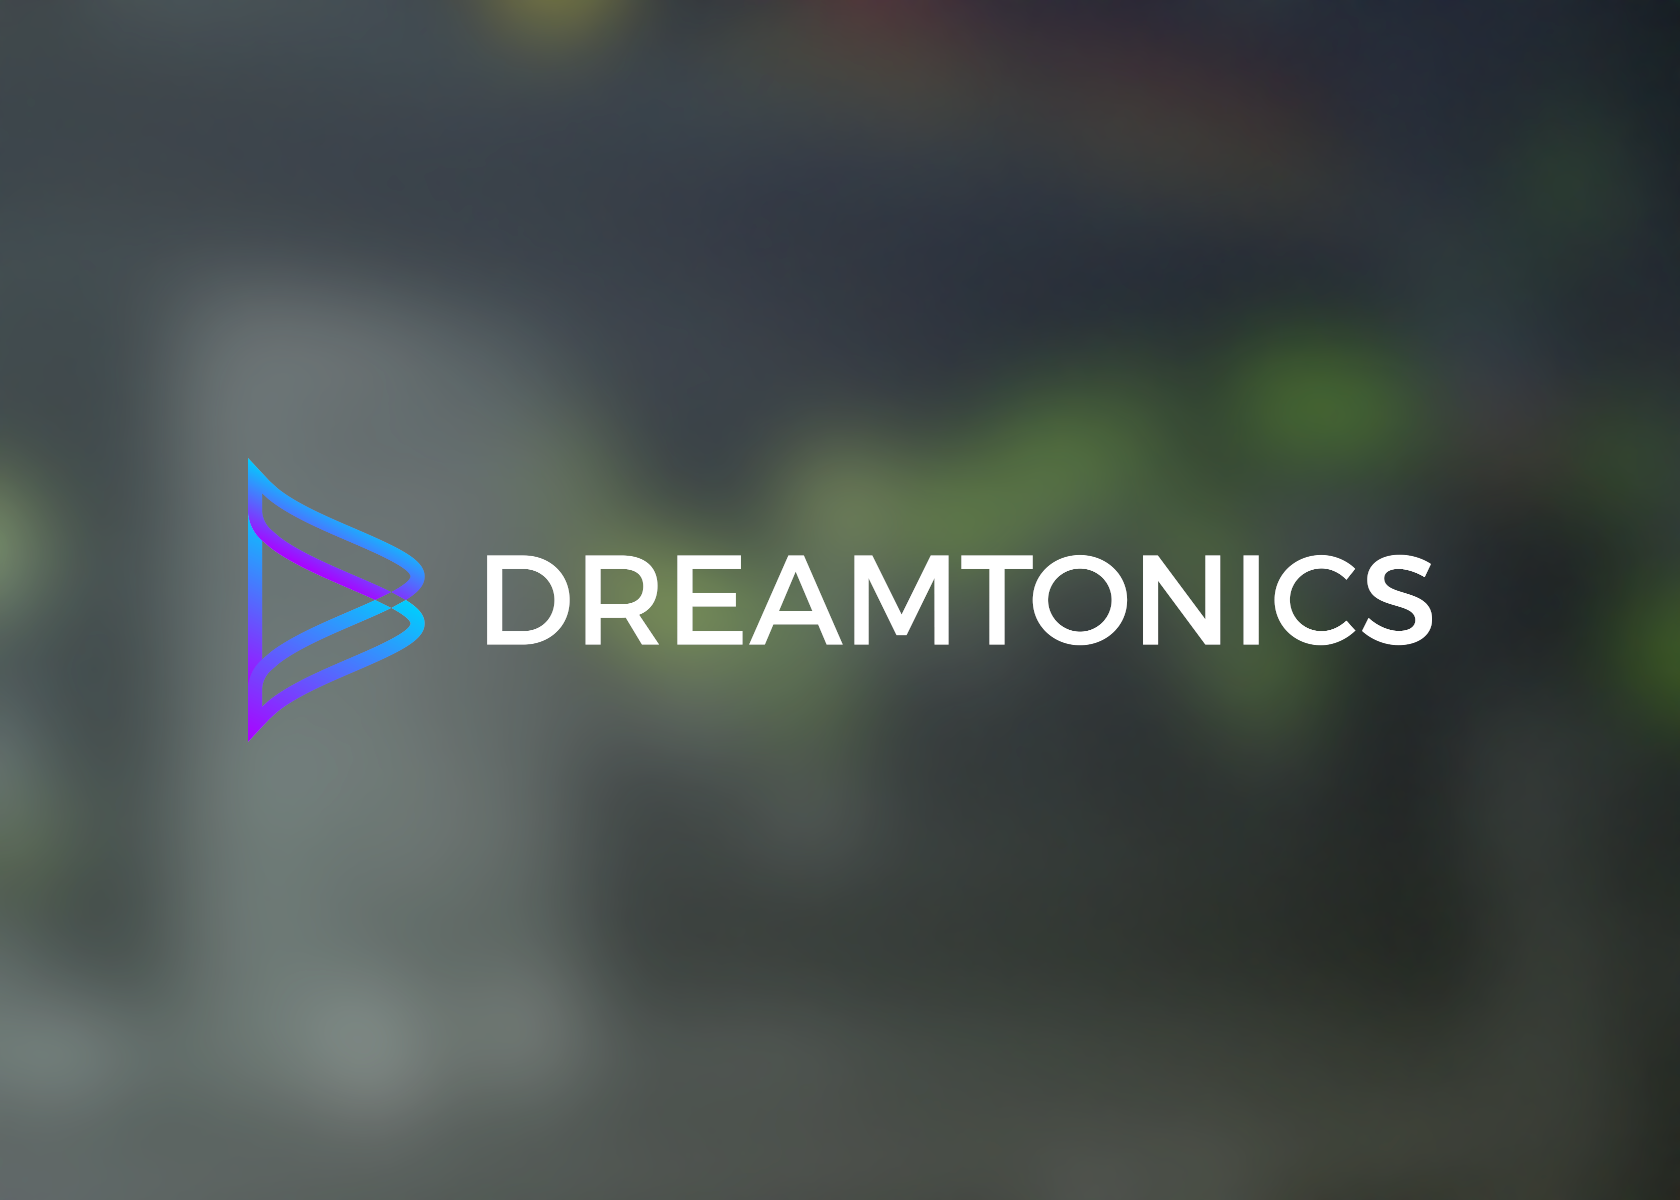 www.dreamtonics.com